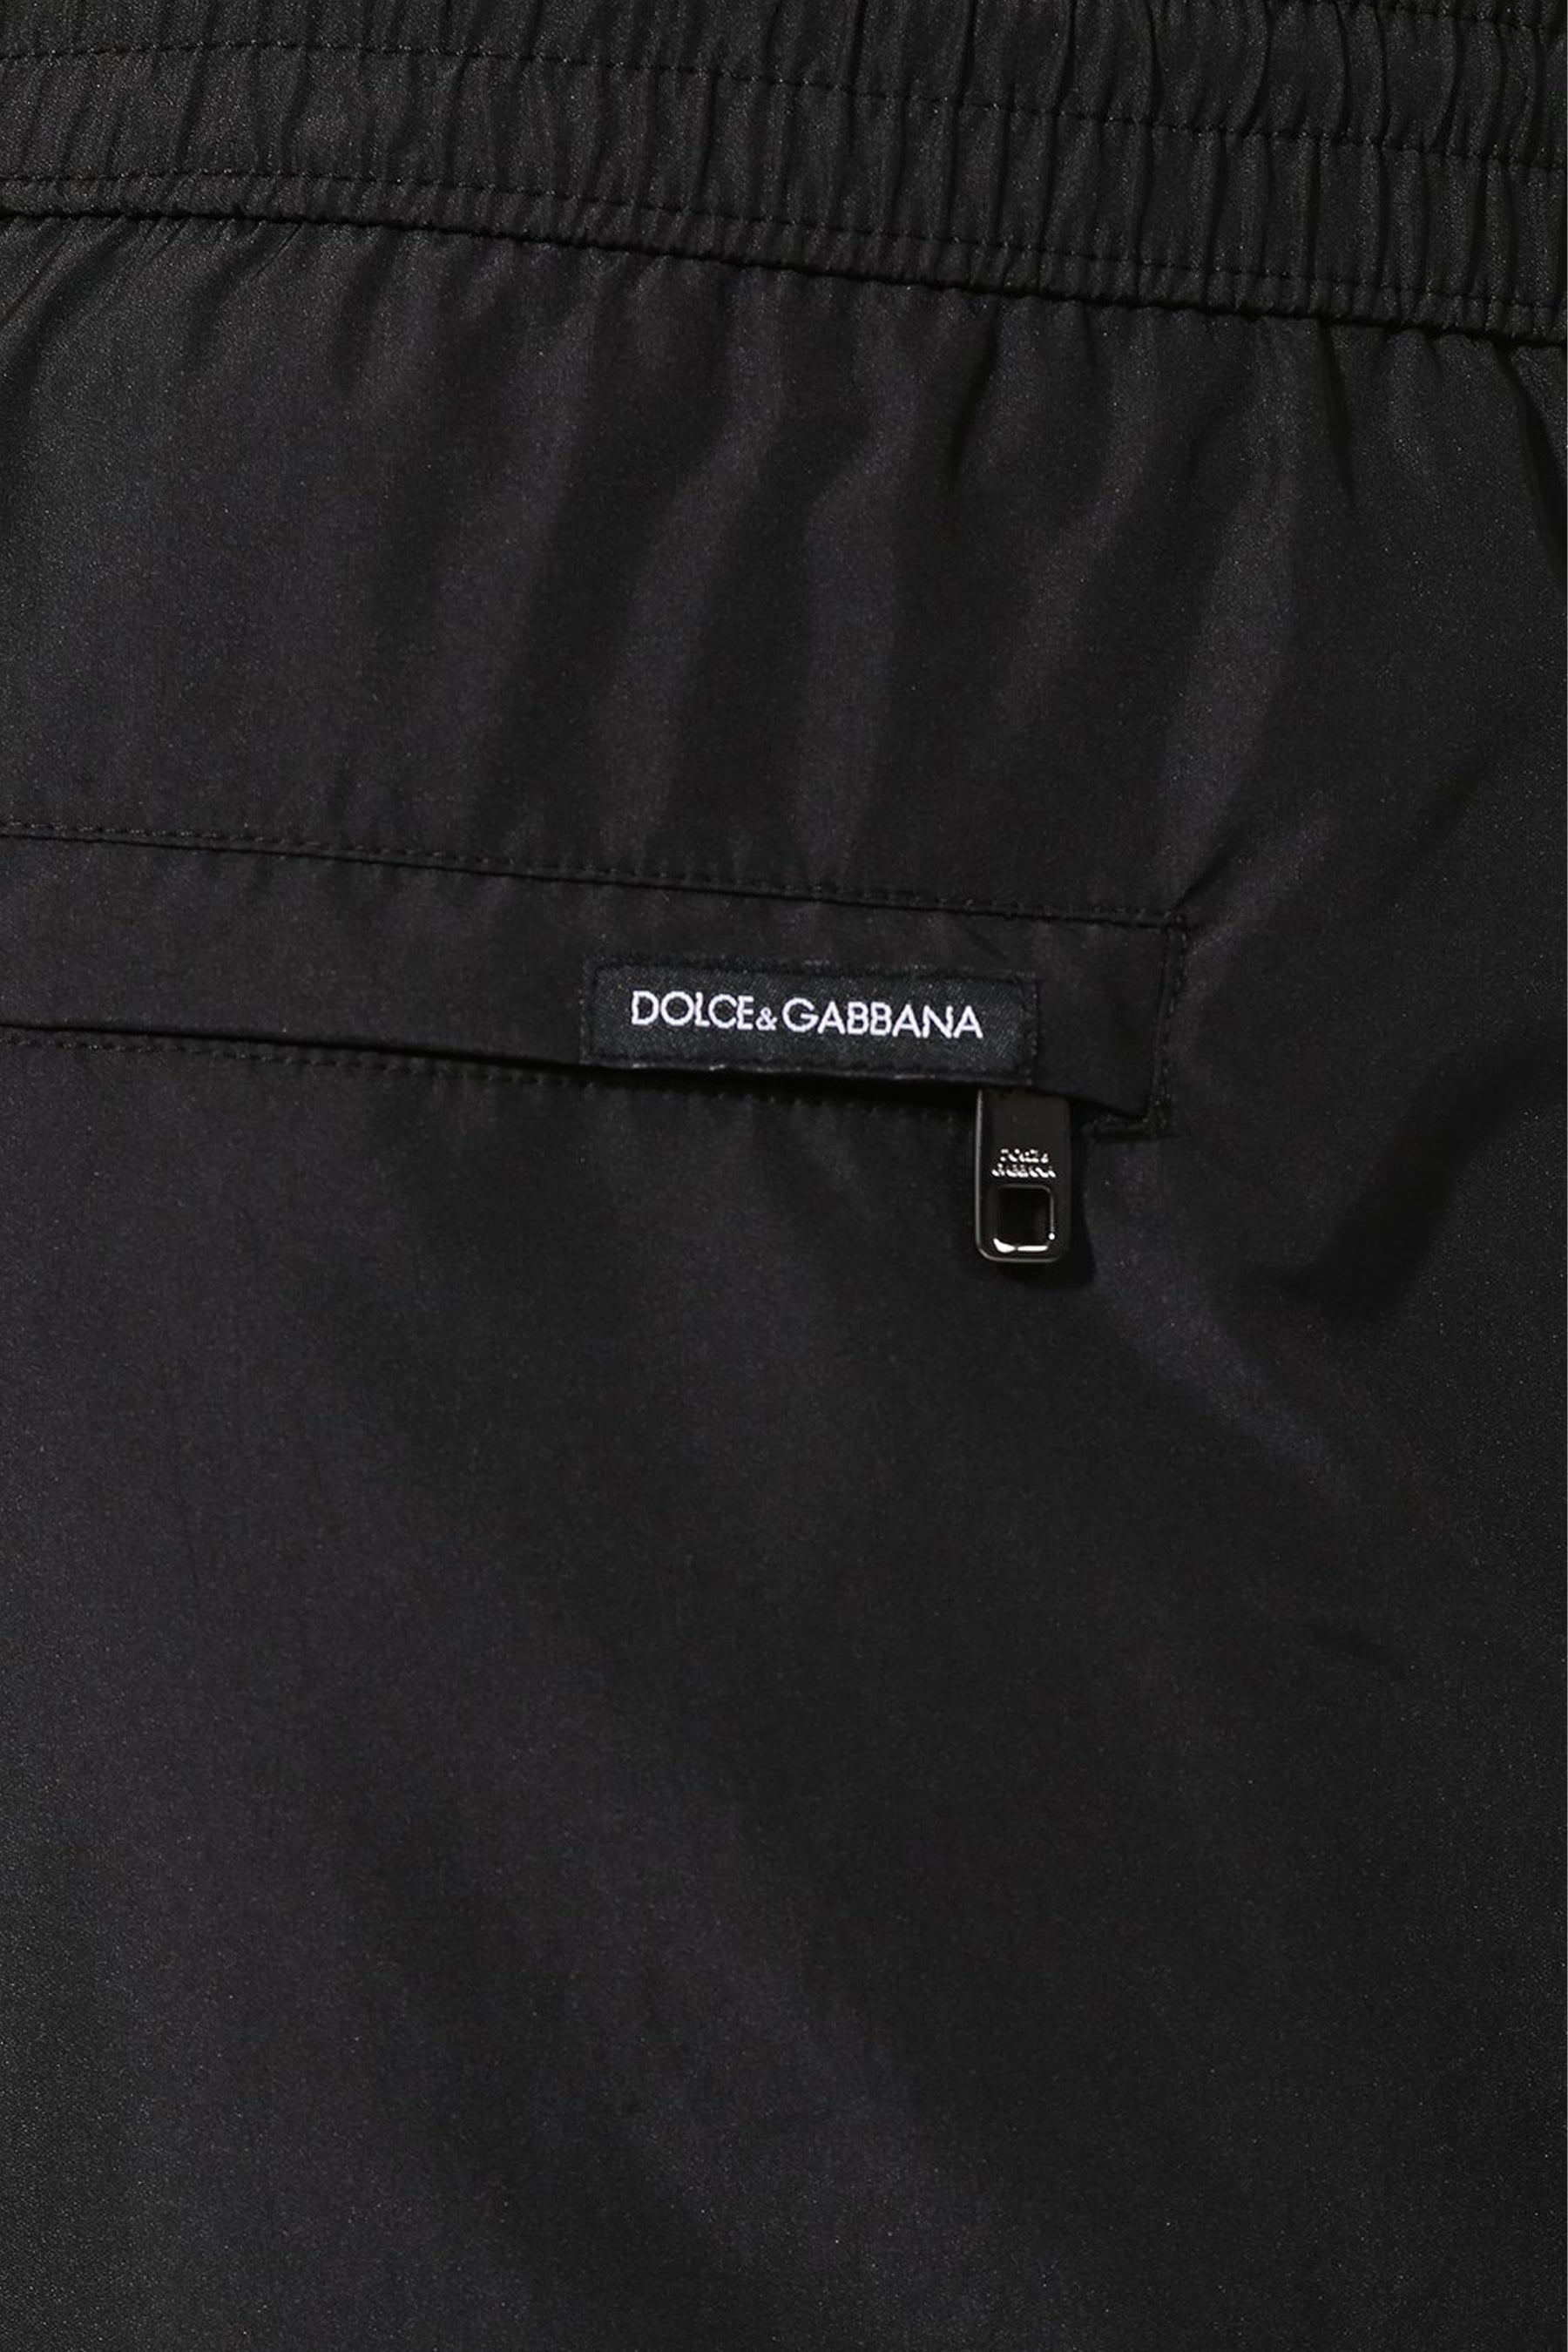 Dolce & Gabbana Swim Shorts Black